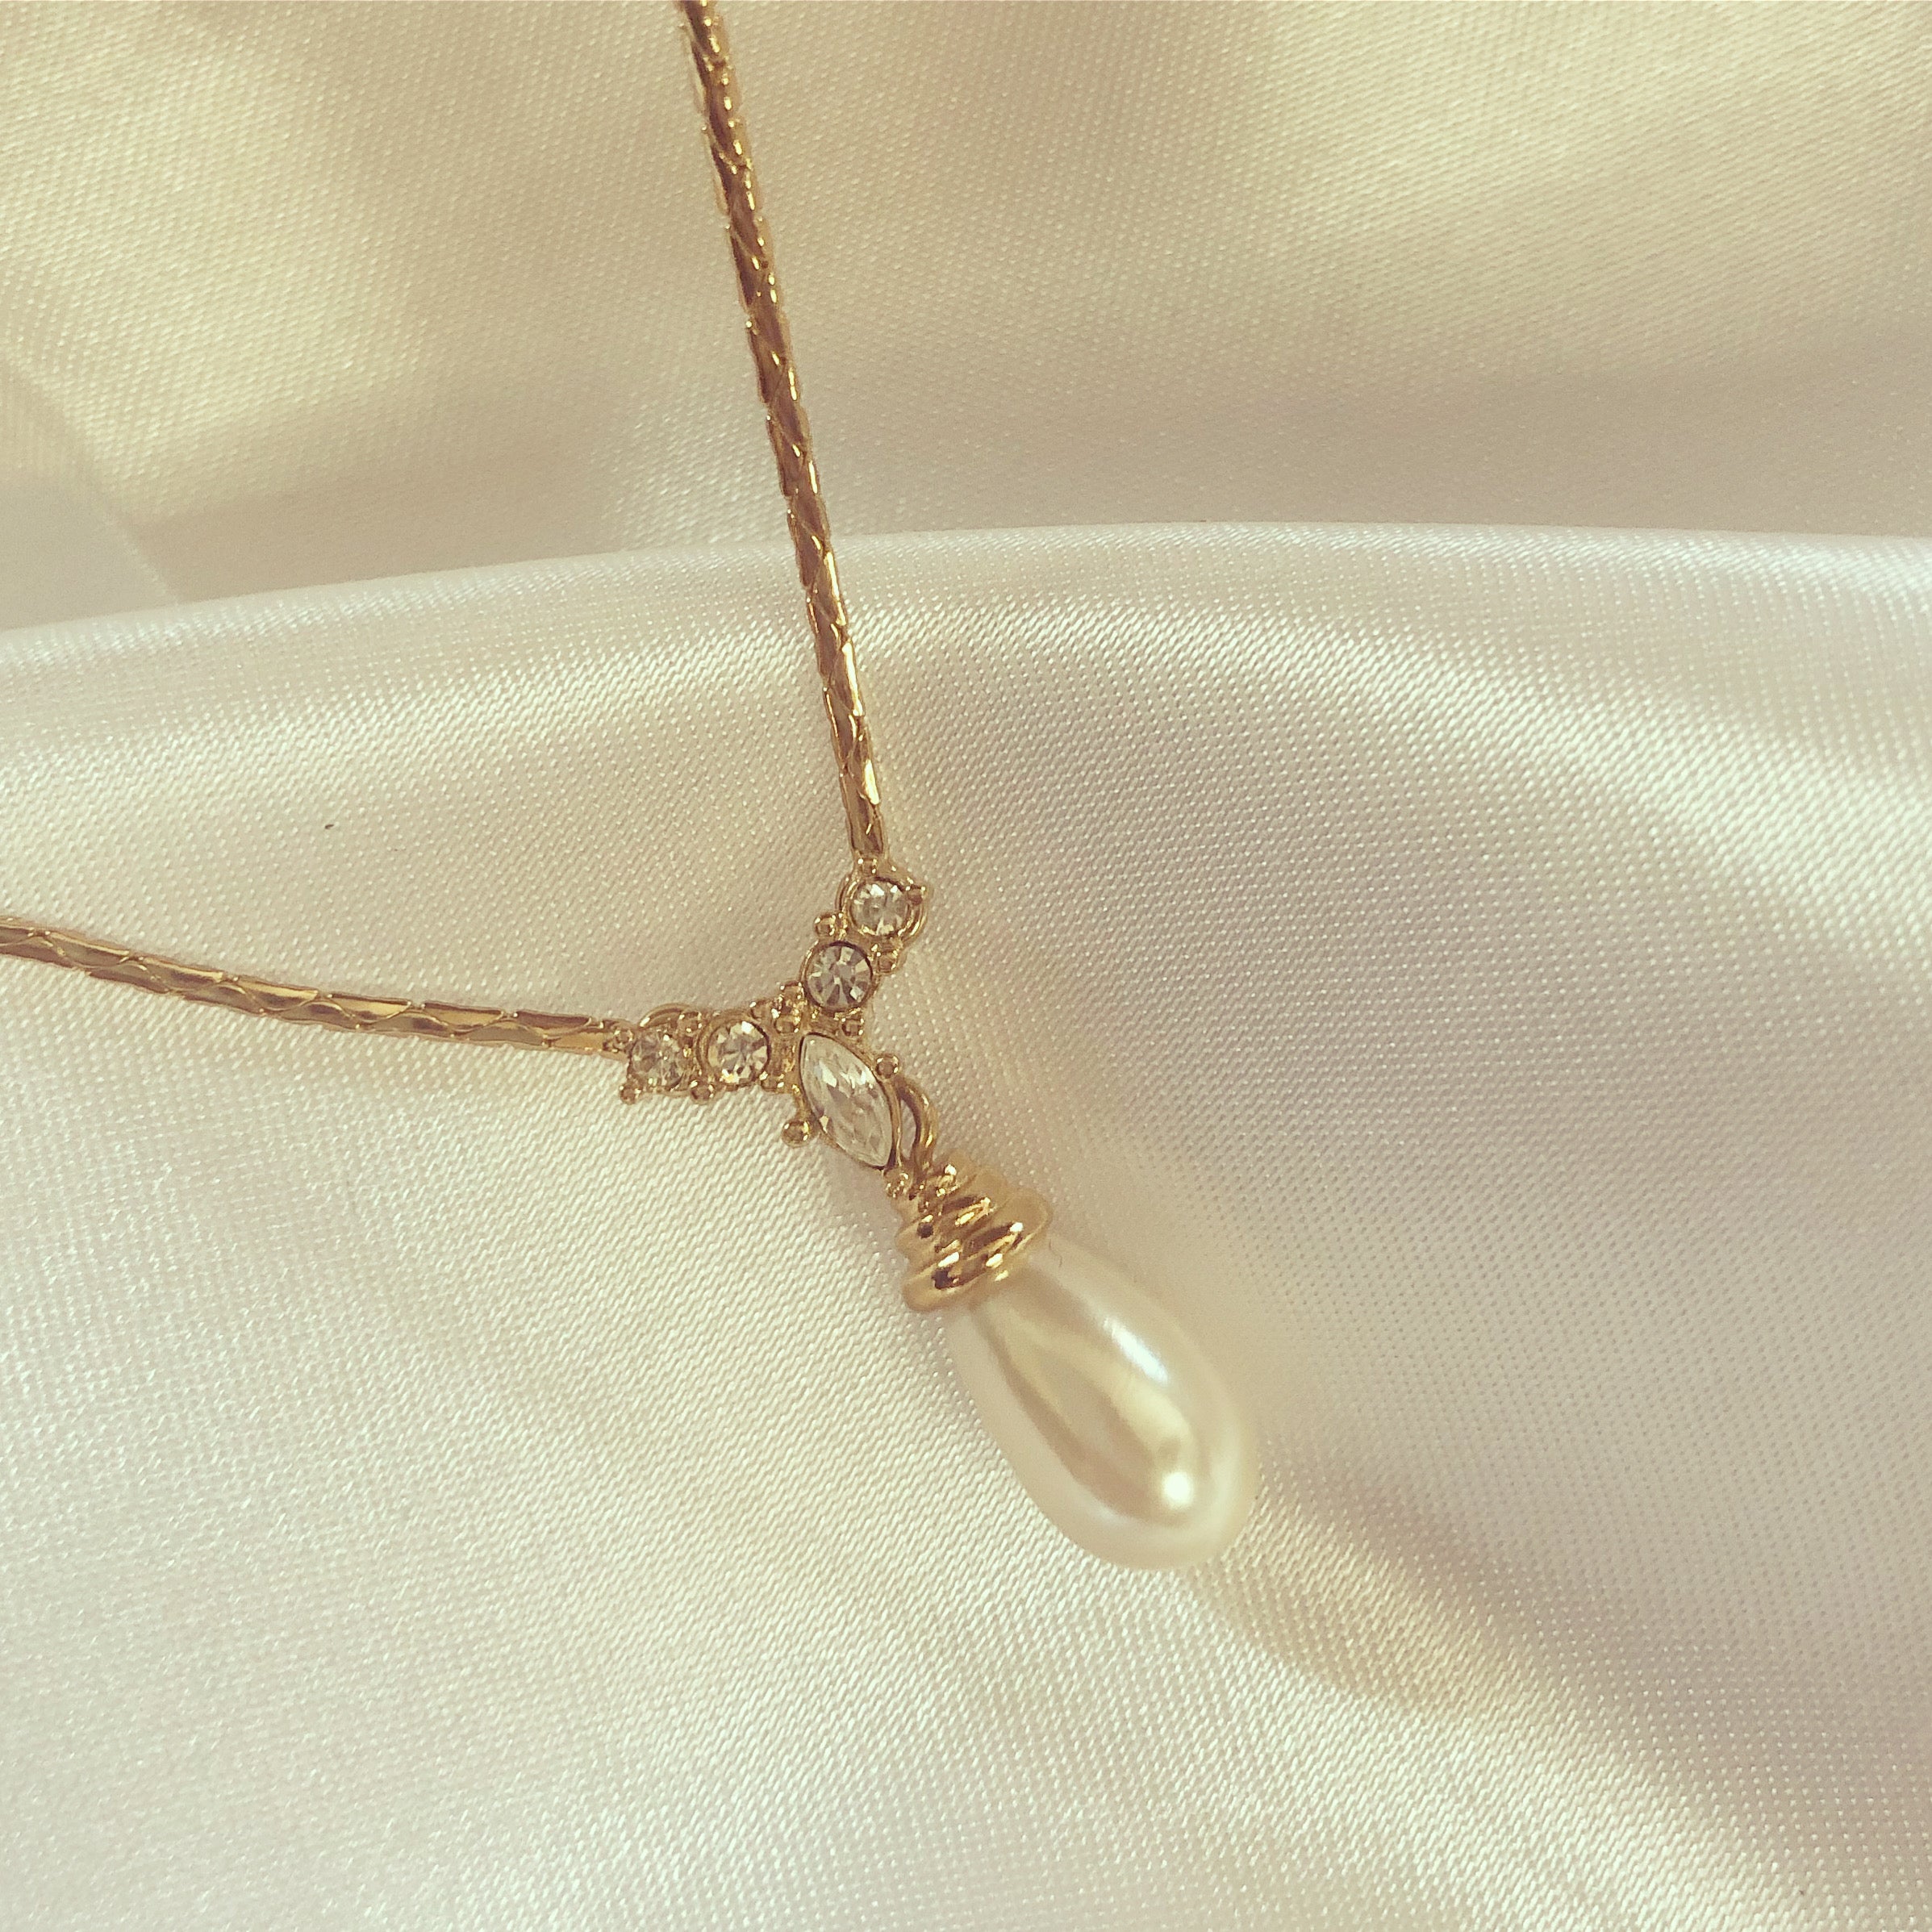 Dior  Jewelry  Christian Dior Pearls Necklace 98s  Poshmark